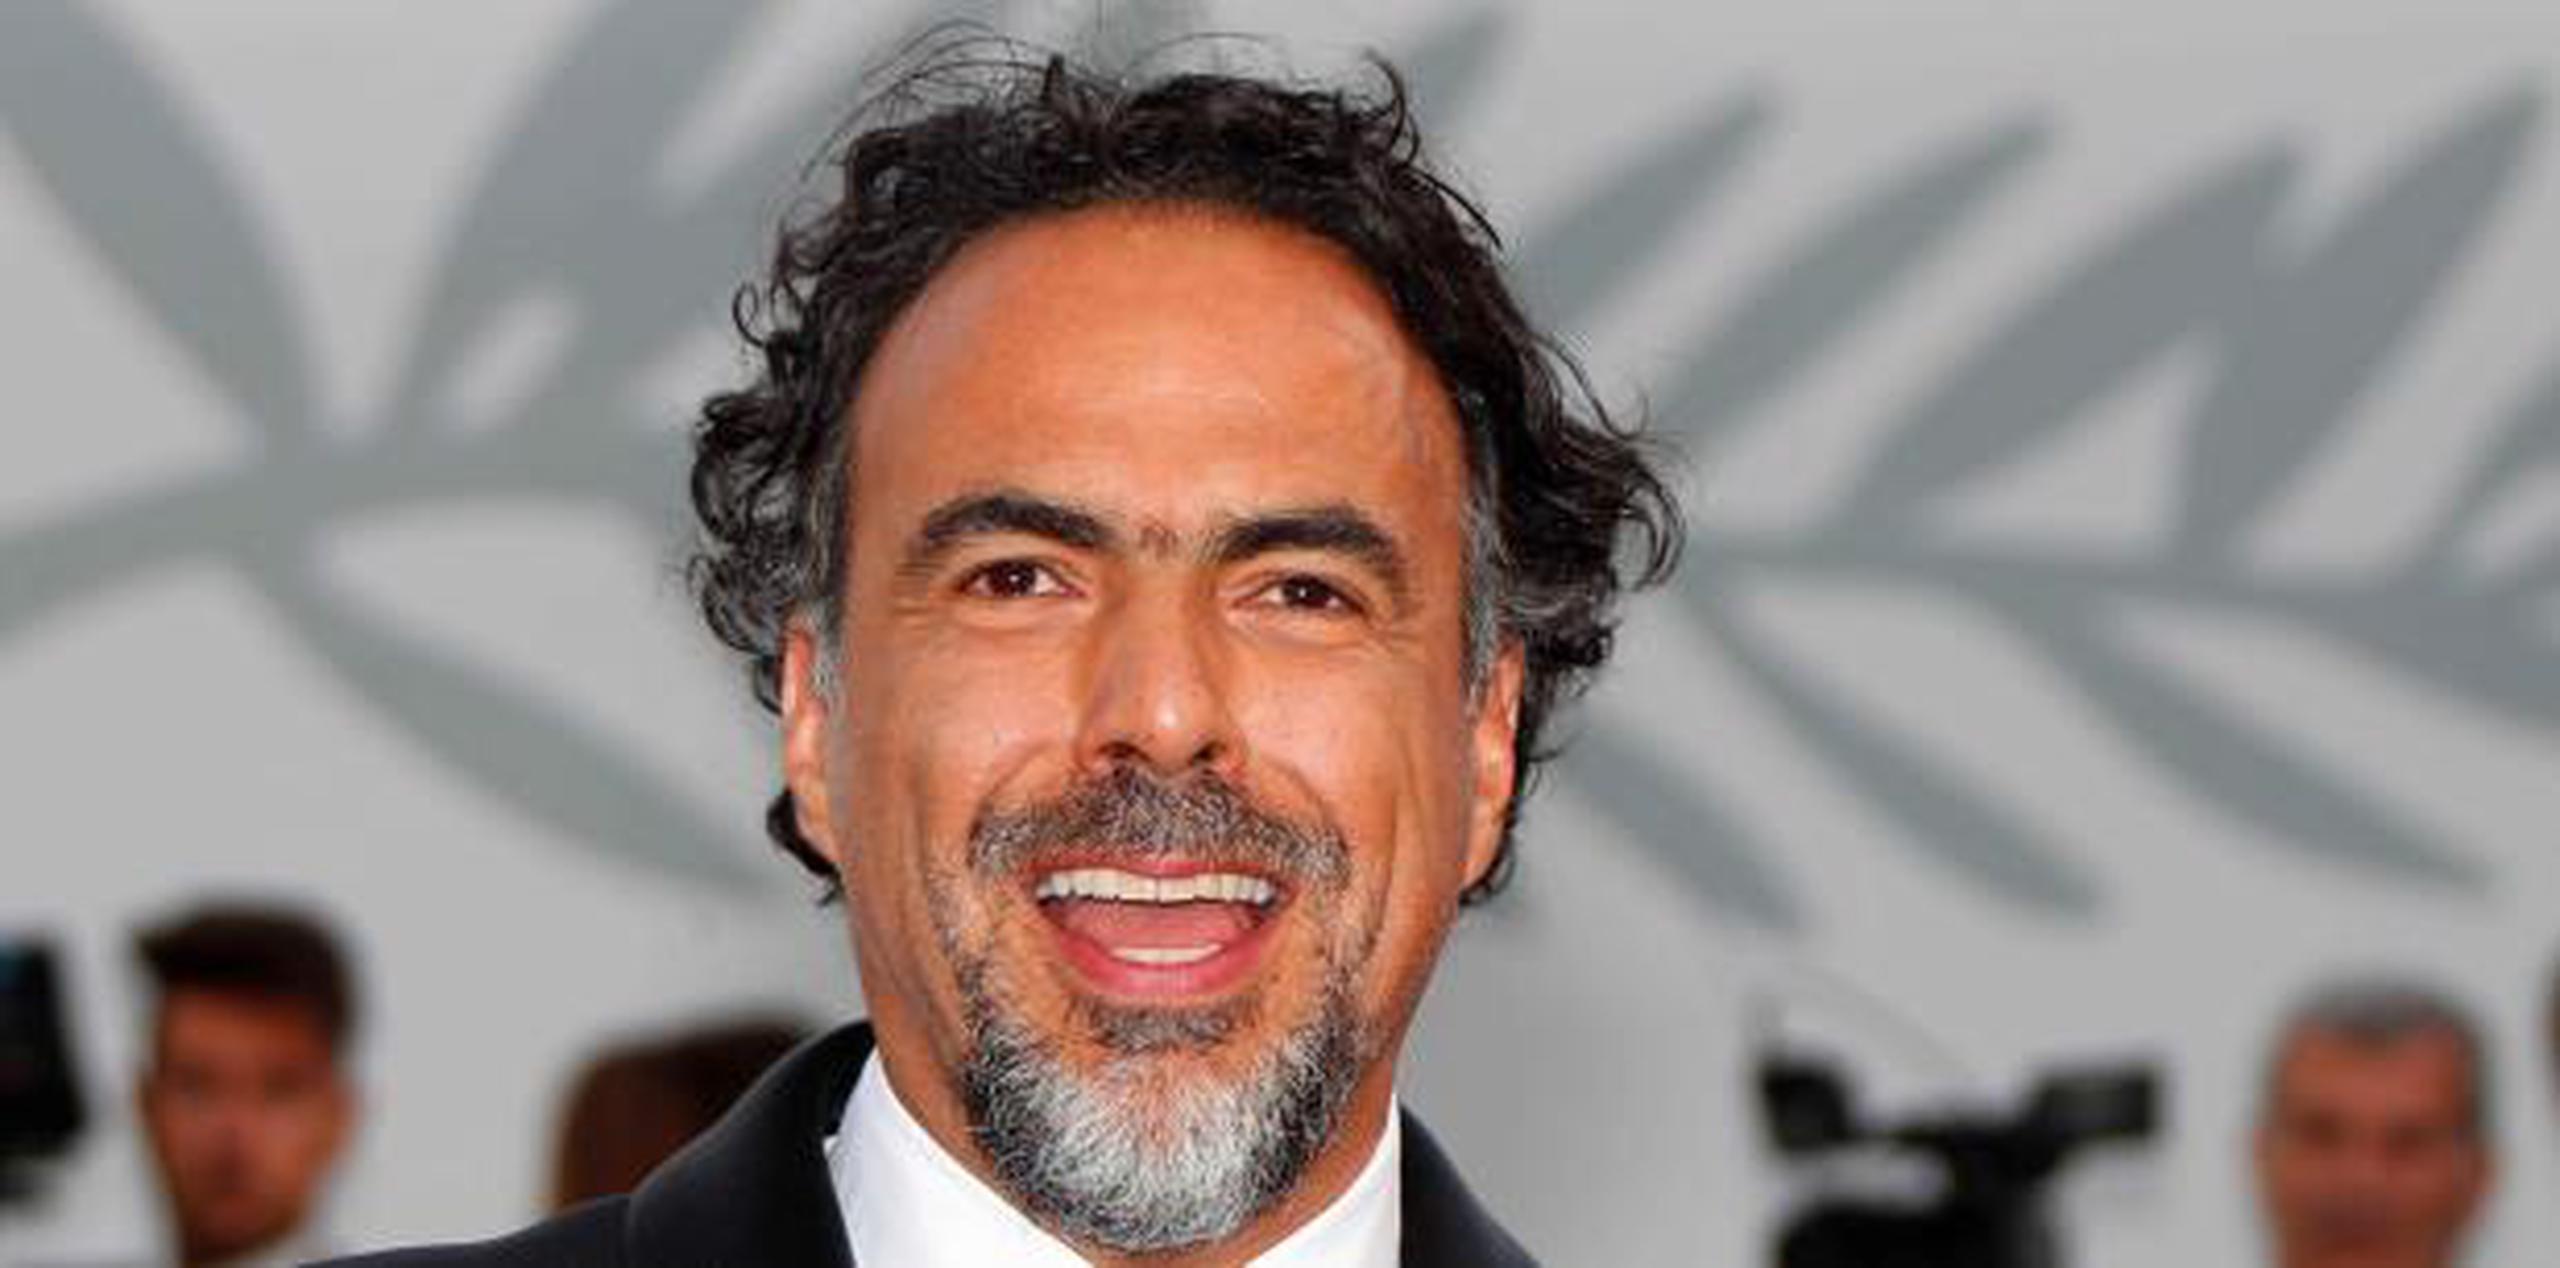 Alejandro González Iñárritu atesora dos Oscar a mejor director por "The Revenant" y "Birdman". (EFE / Ian Langsdon)